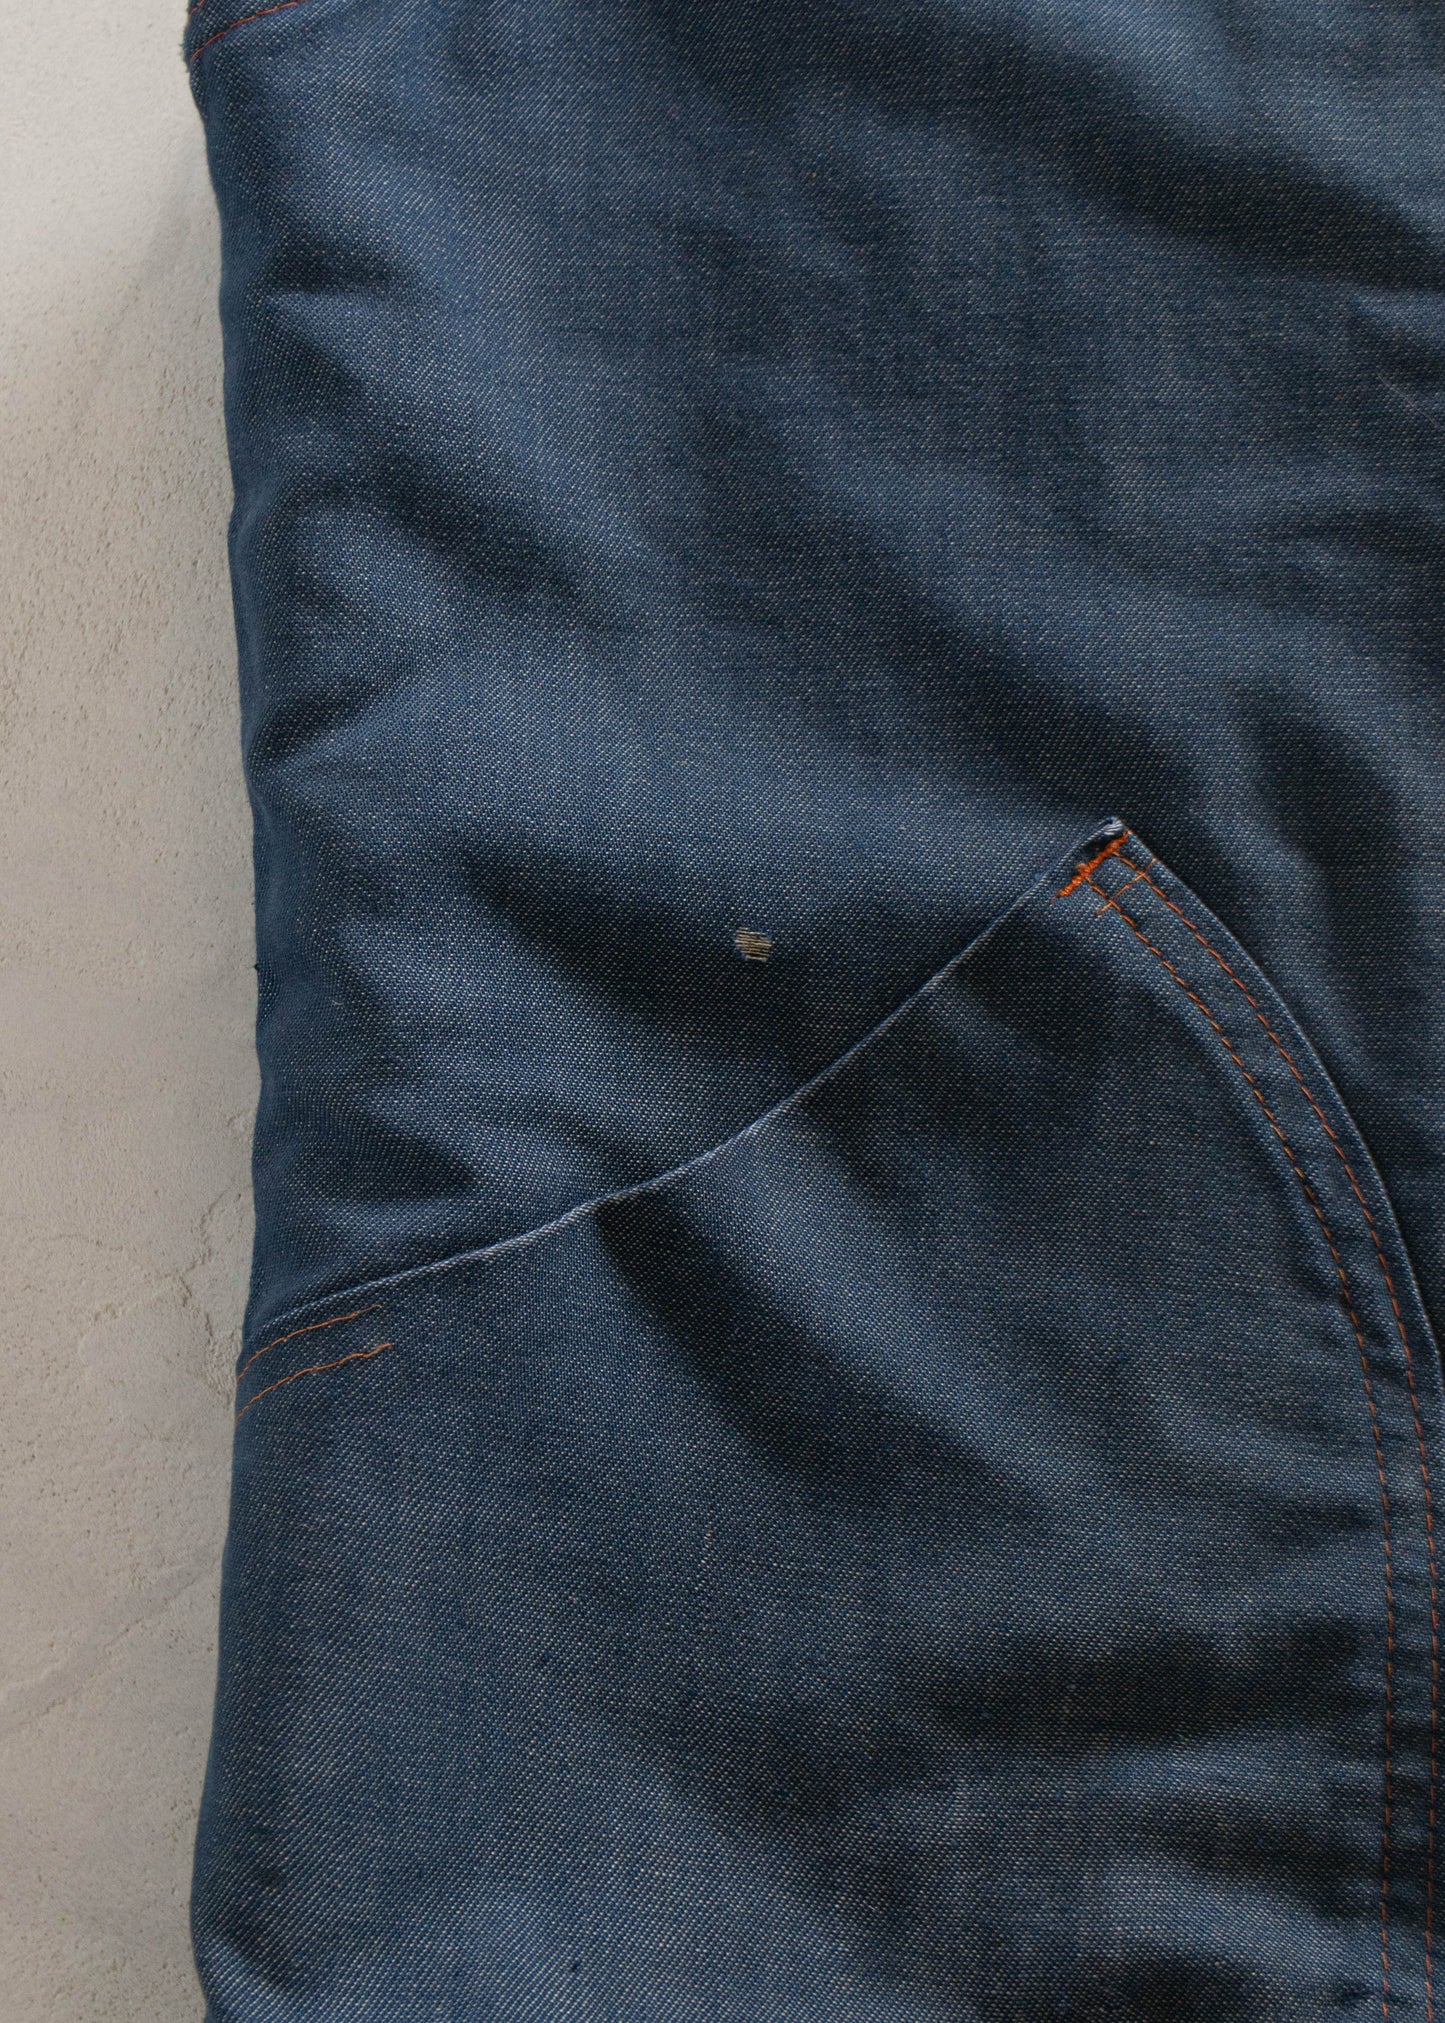 1970s Sherpa Lined Denim Vest Size L/XL